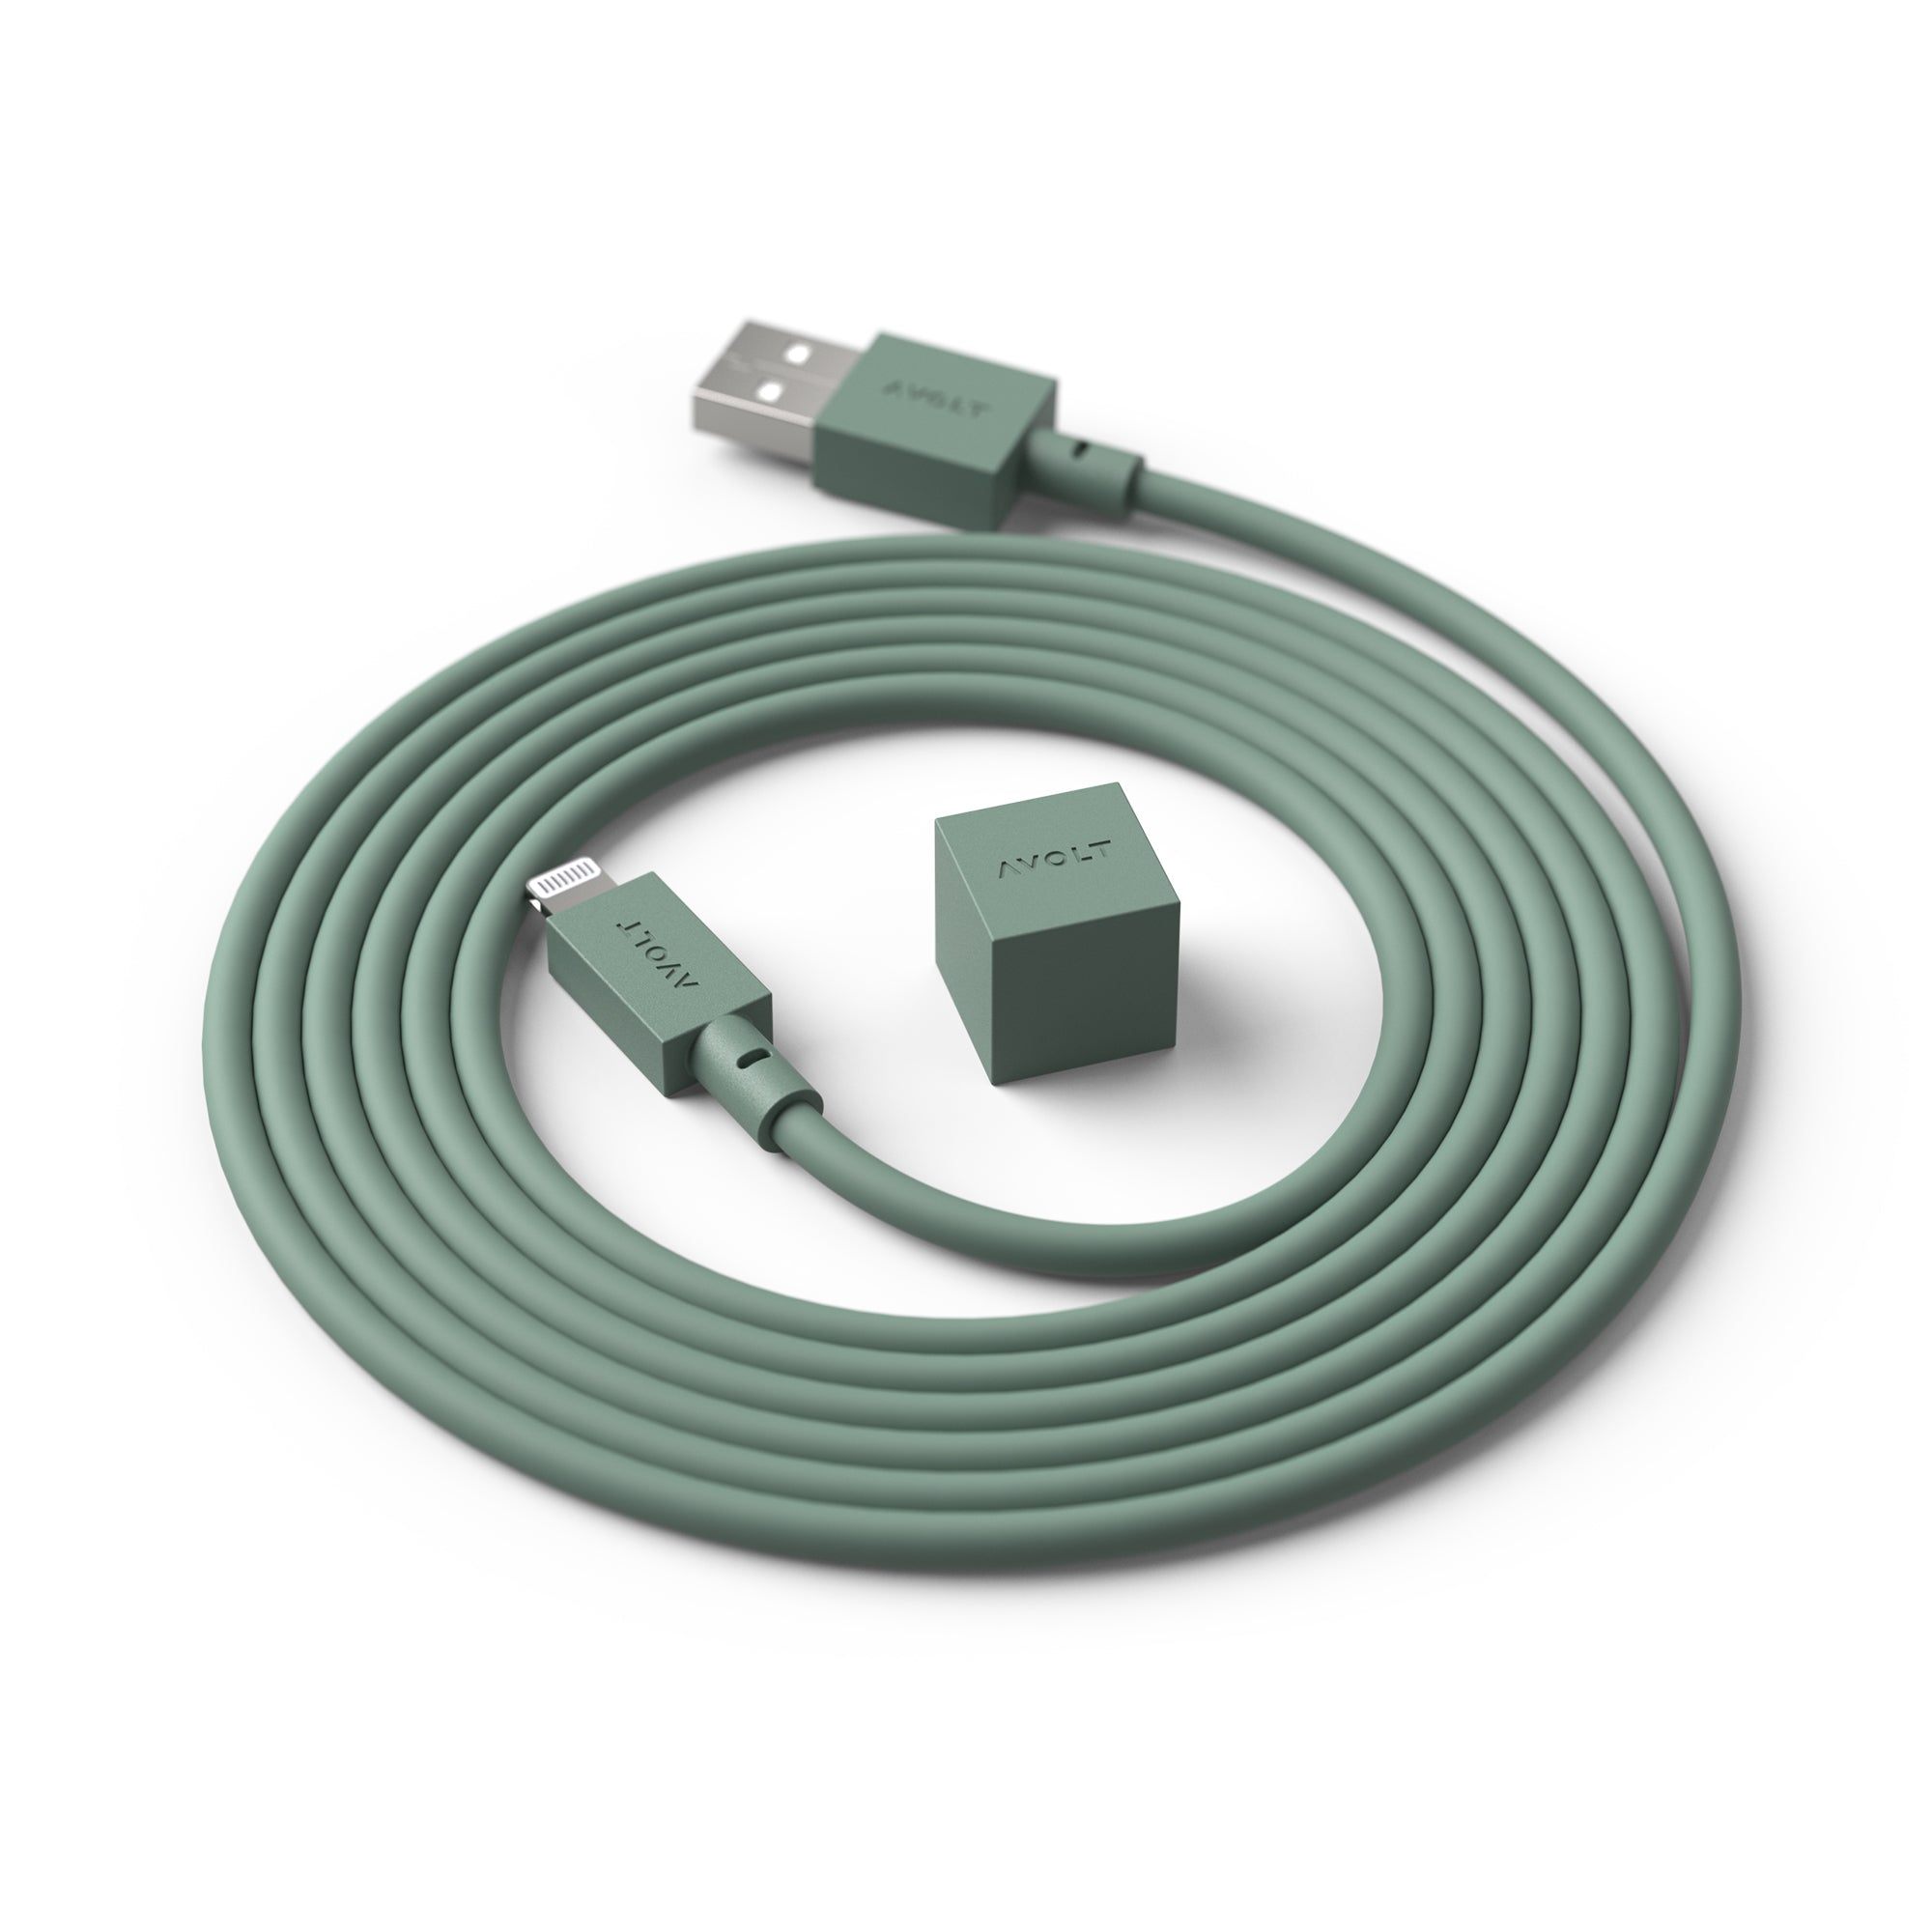 Avolt Cable 1 USB latauskaapeli vihreä - Laatukaluste